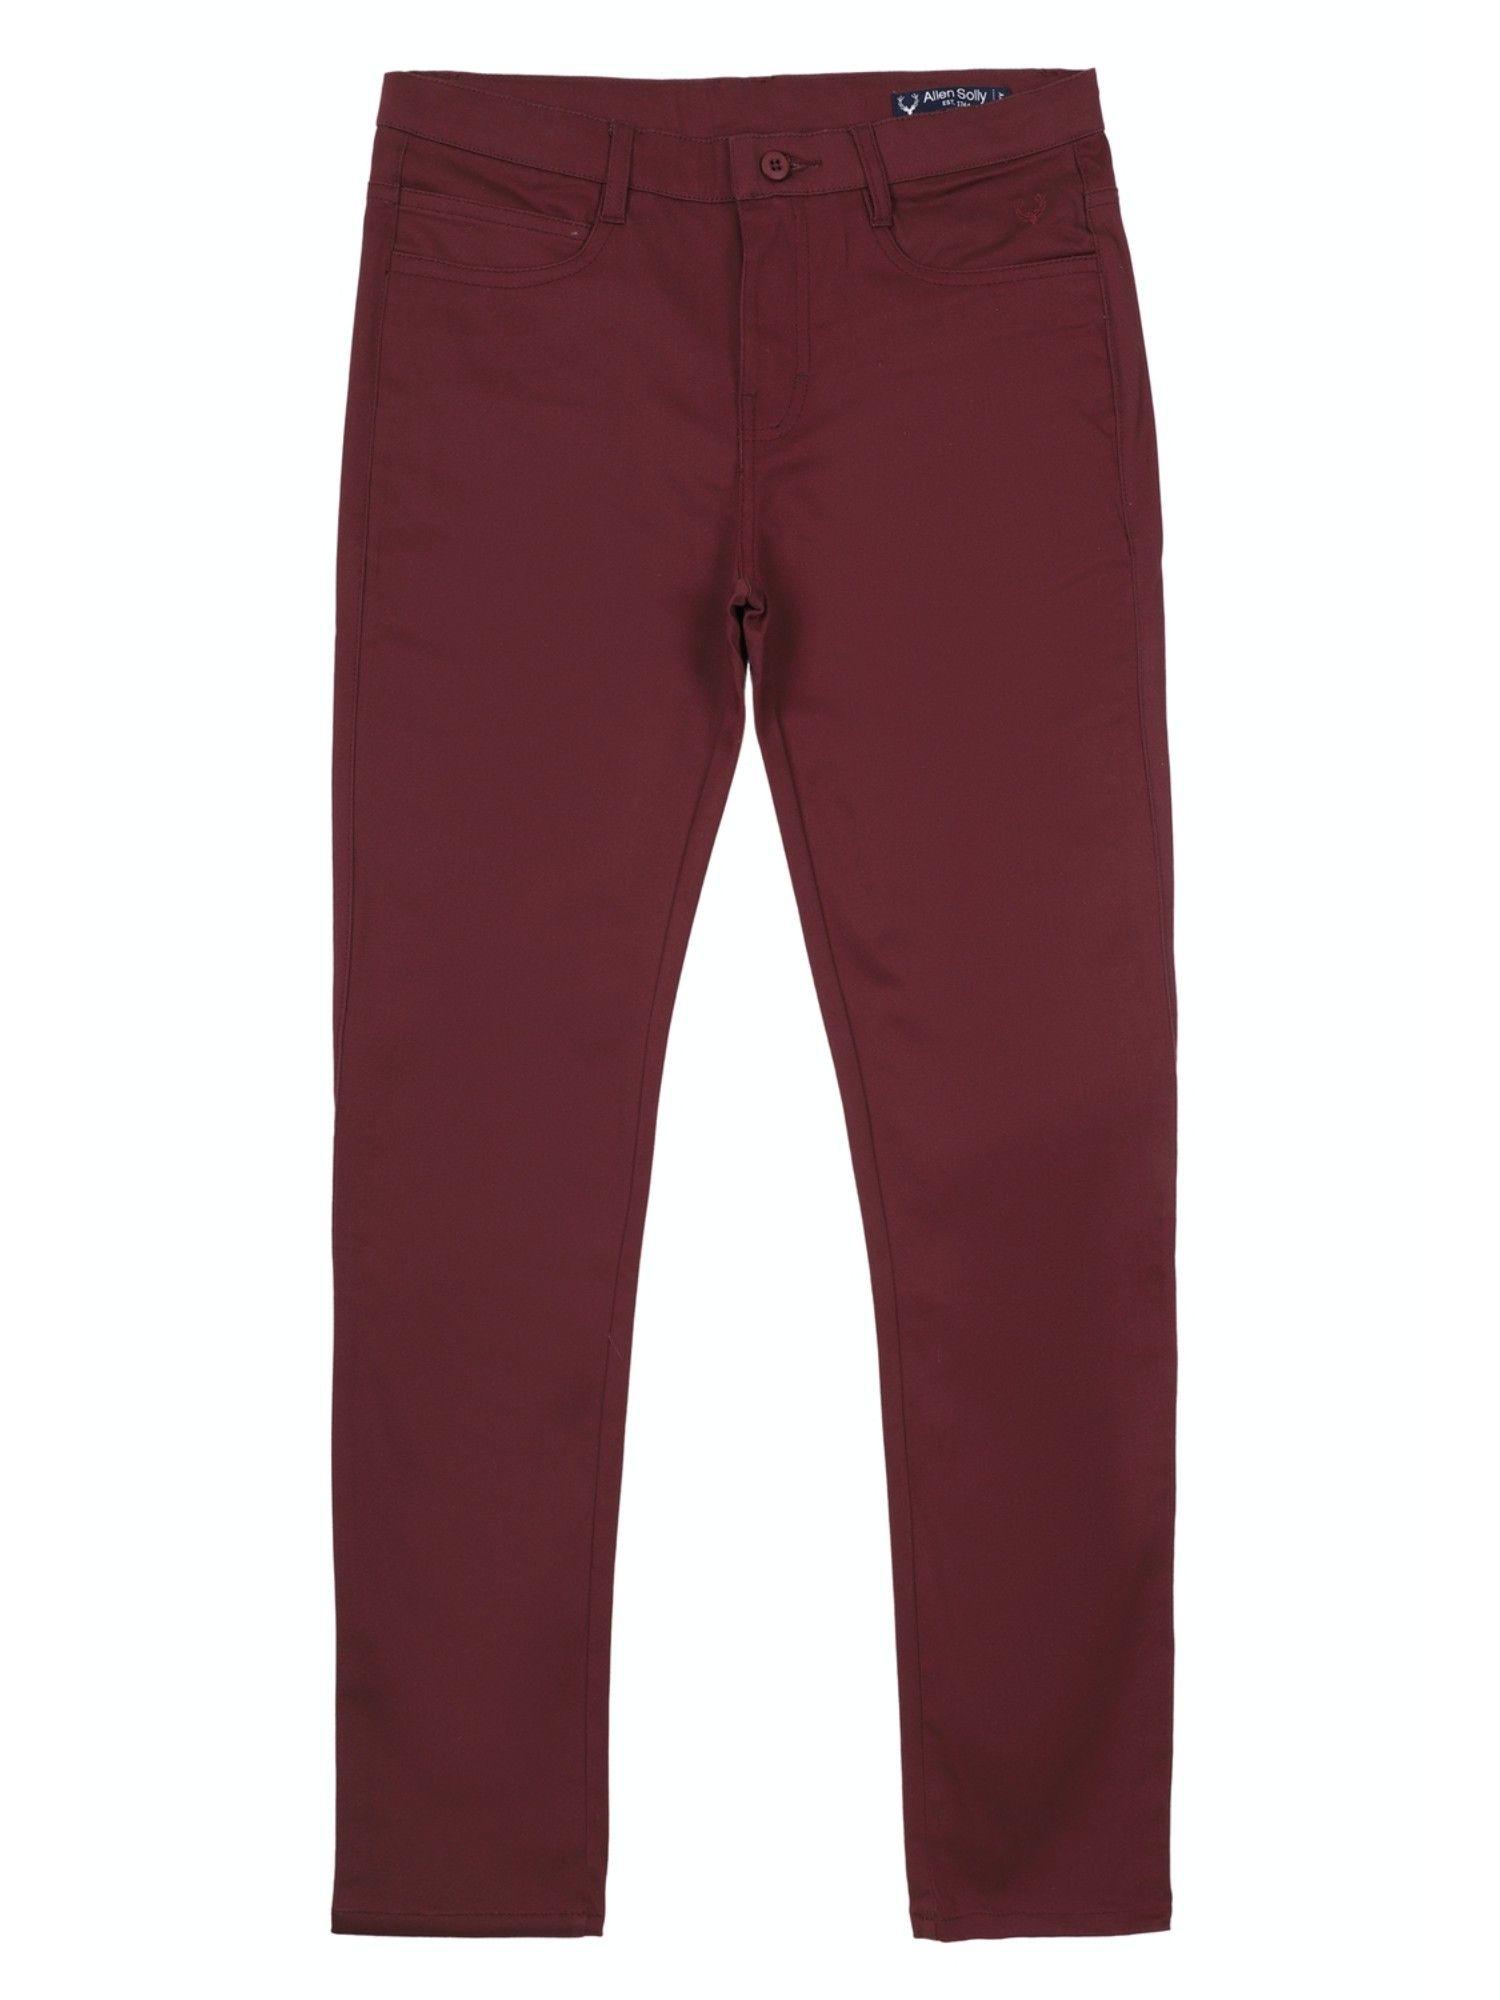 boys maroon plain trousers